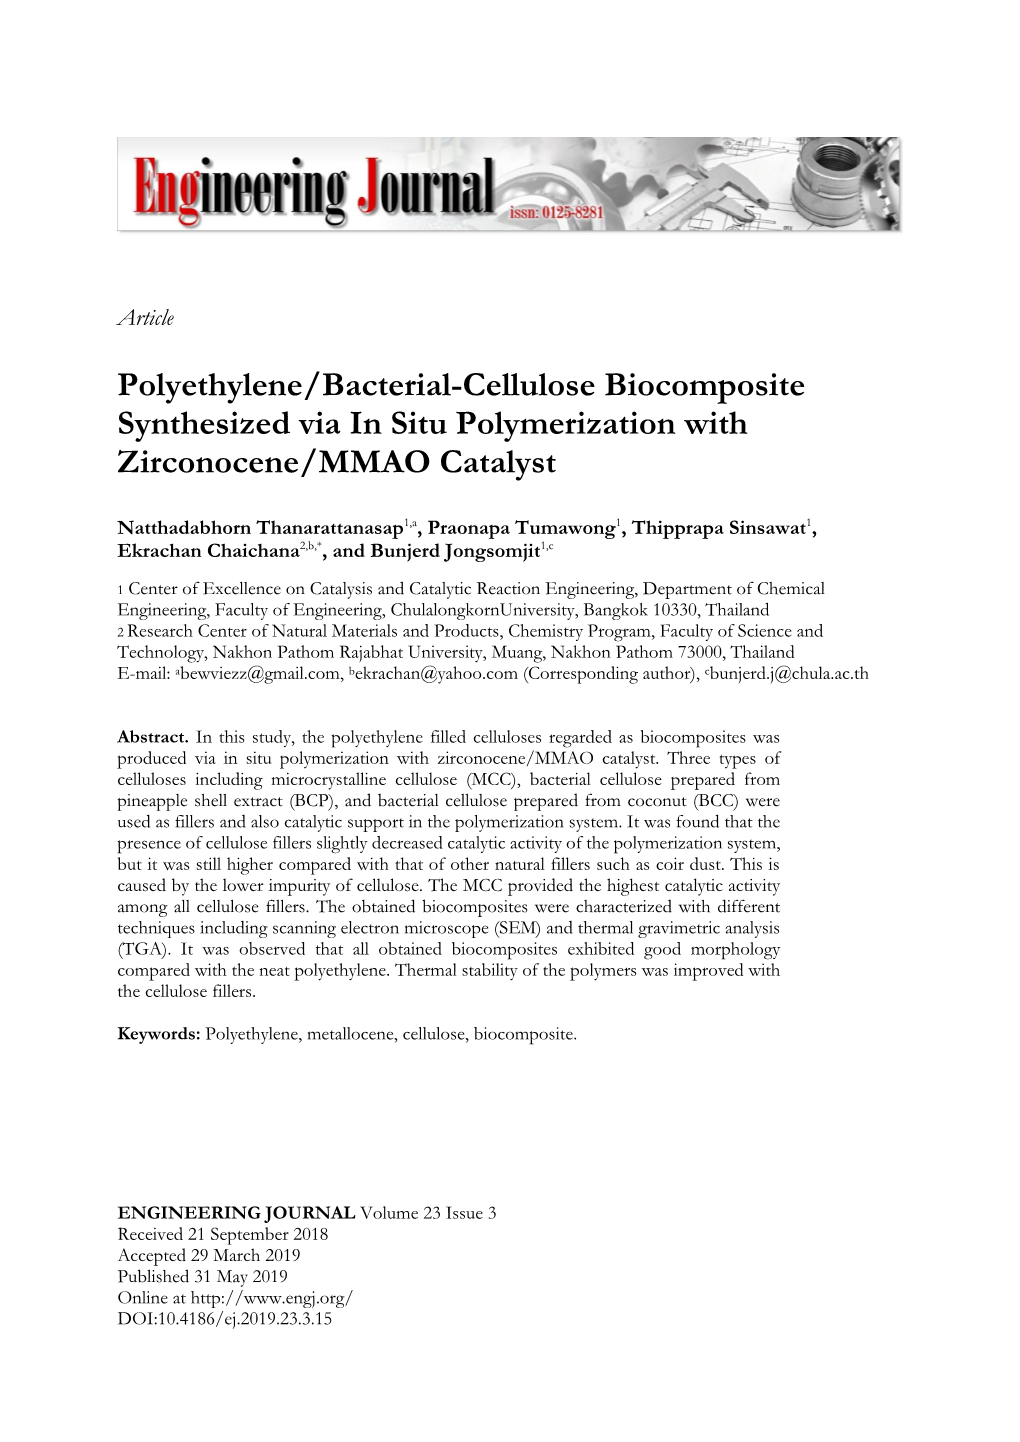 Polyethylene/Bacterial-Cellulose Biocomposite Synthesized Via in Situ Polymerization with Zirconocene/MMAO Catalyst